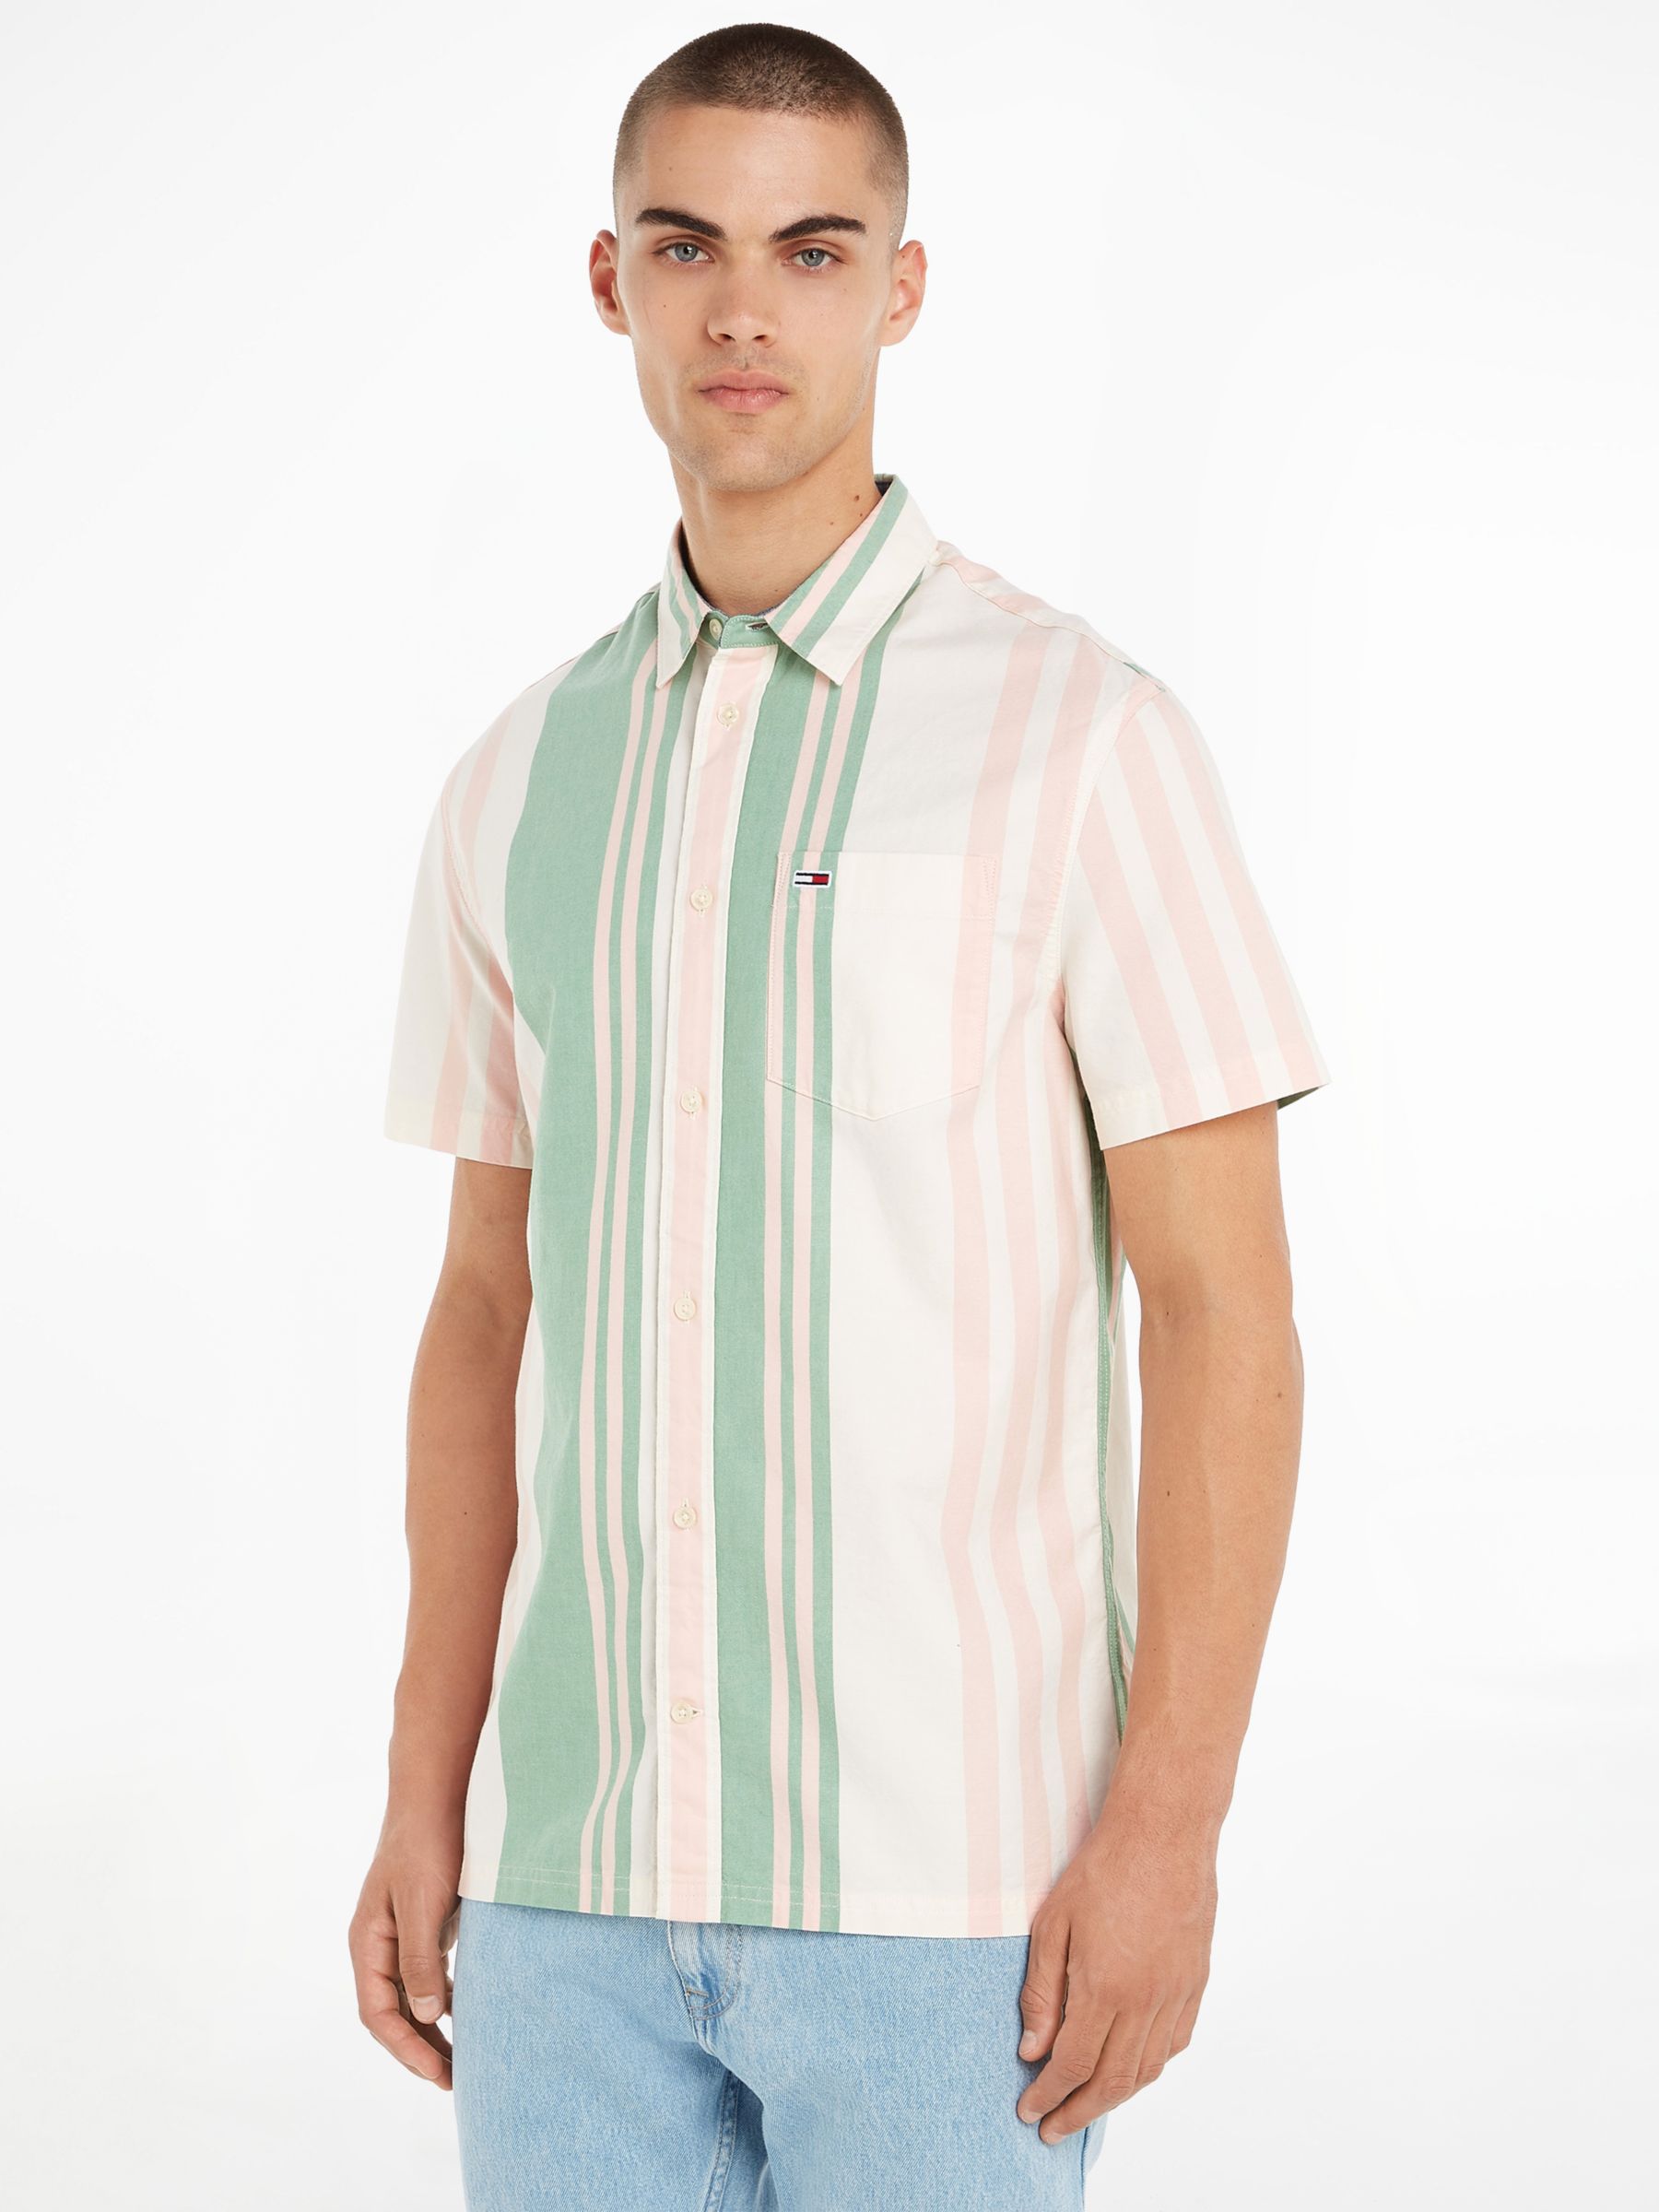 Tommy Hilfiger Bold Stripe Shirt, Green/Multi, XS